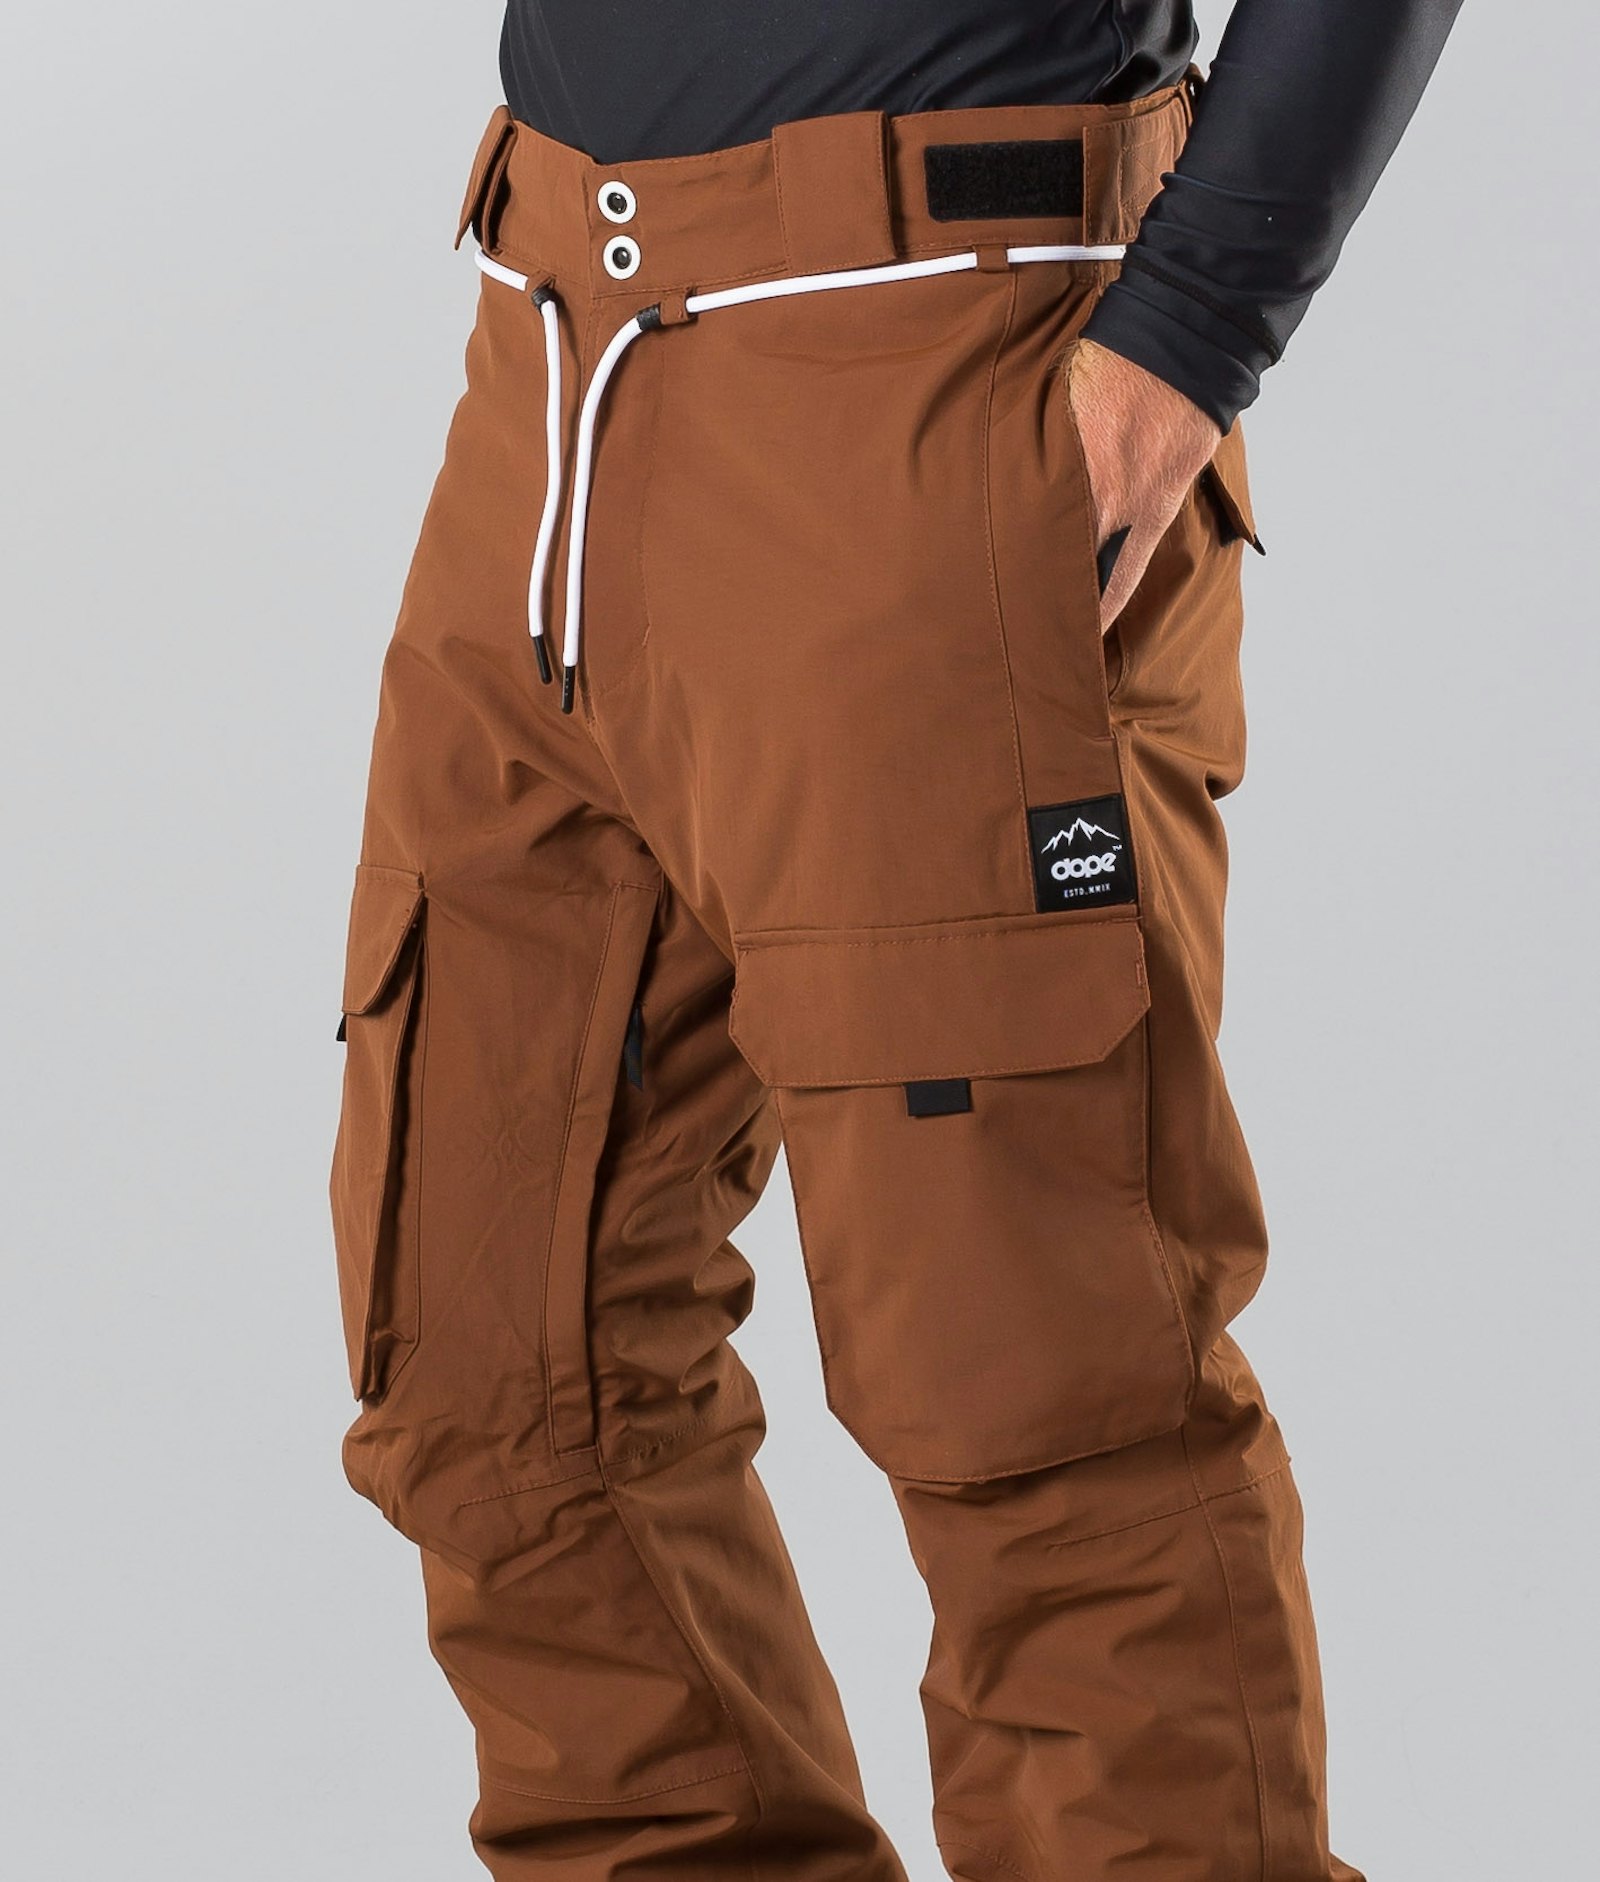 Dope Poise 2018 Snowboard Pants Men Adobe